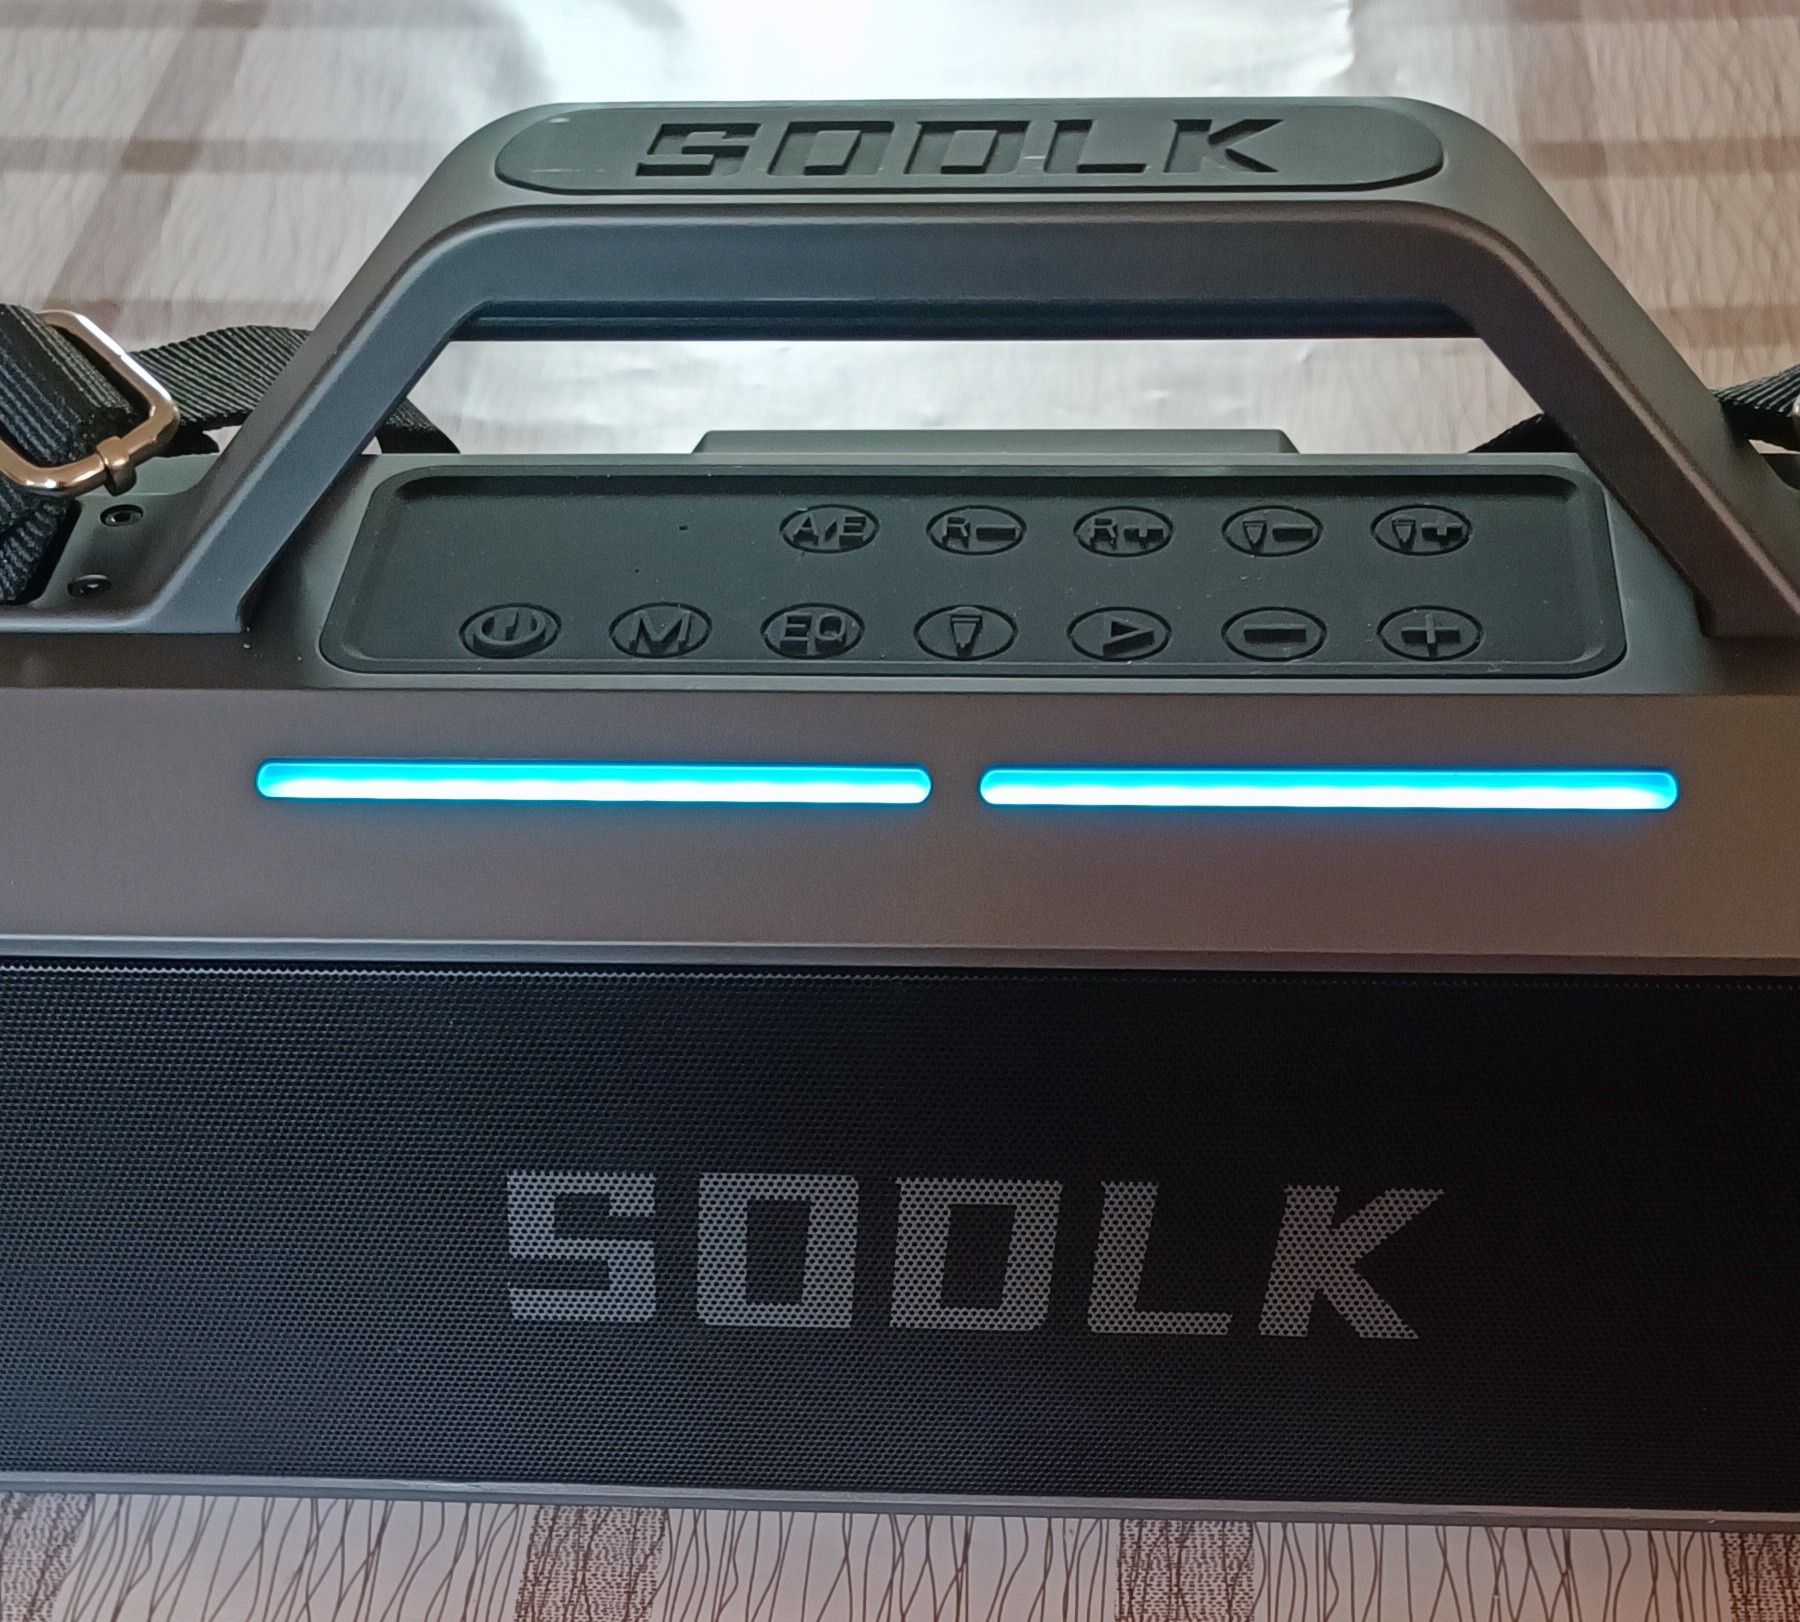 Boxa portabila SOLDK 100 w